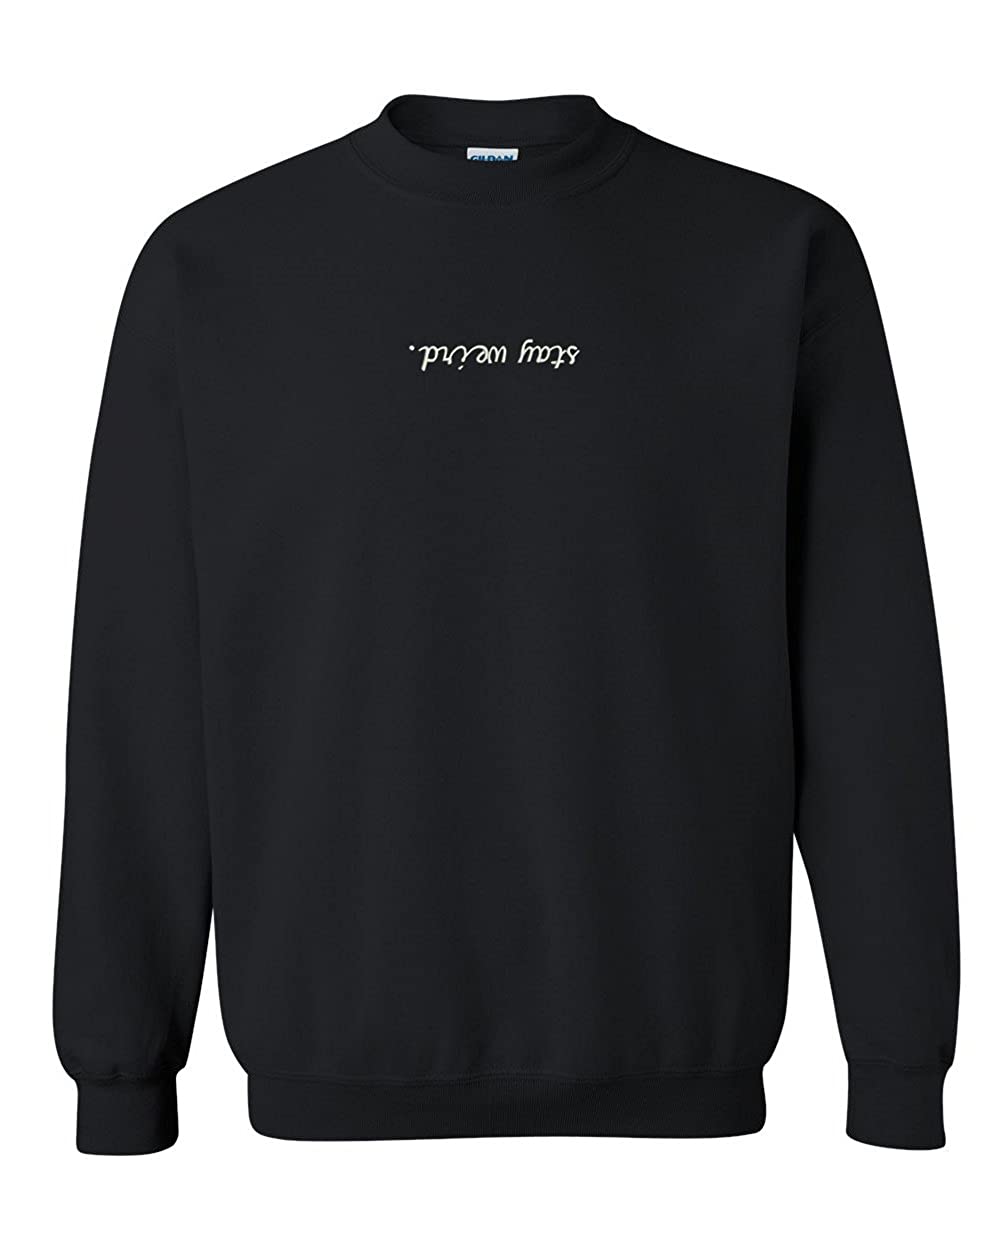 Trendy Apparel Shop Stay Weird Embroidered Crewneck Sweatshirt